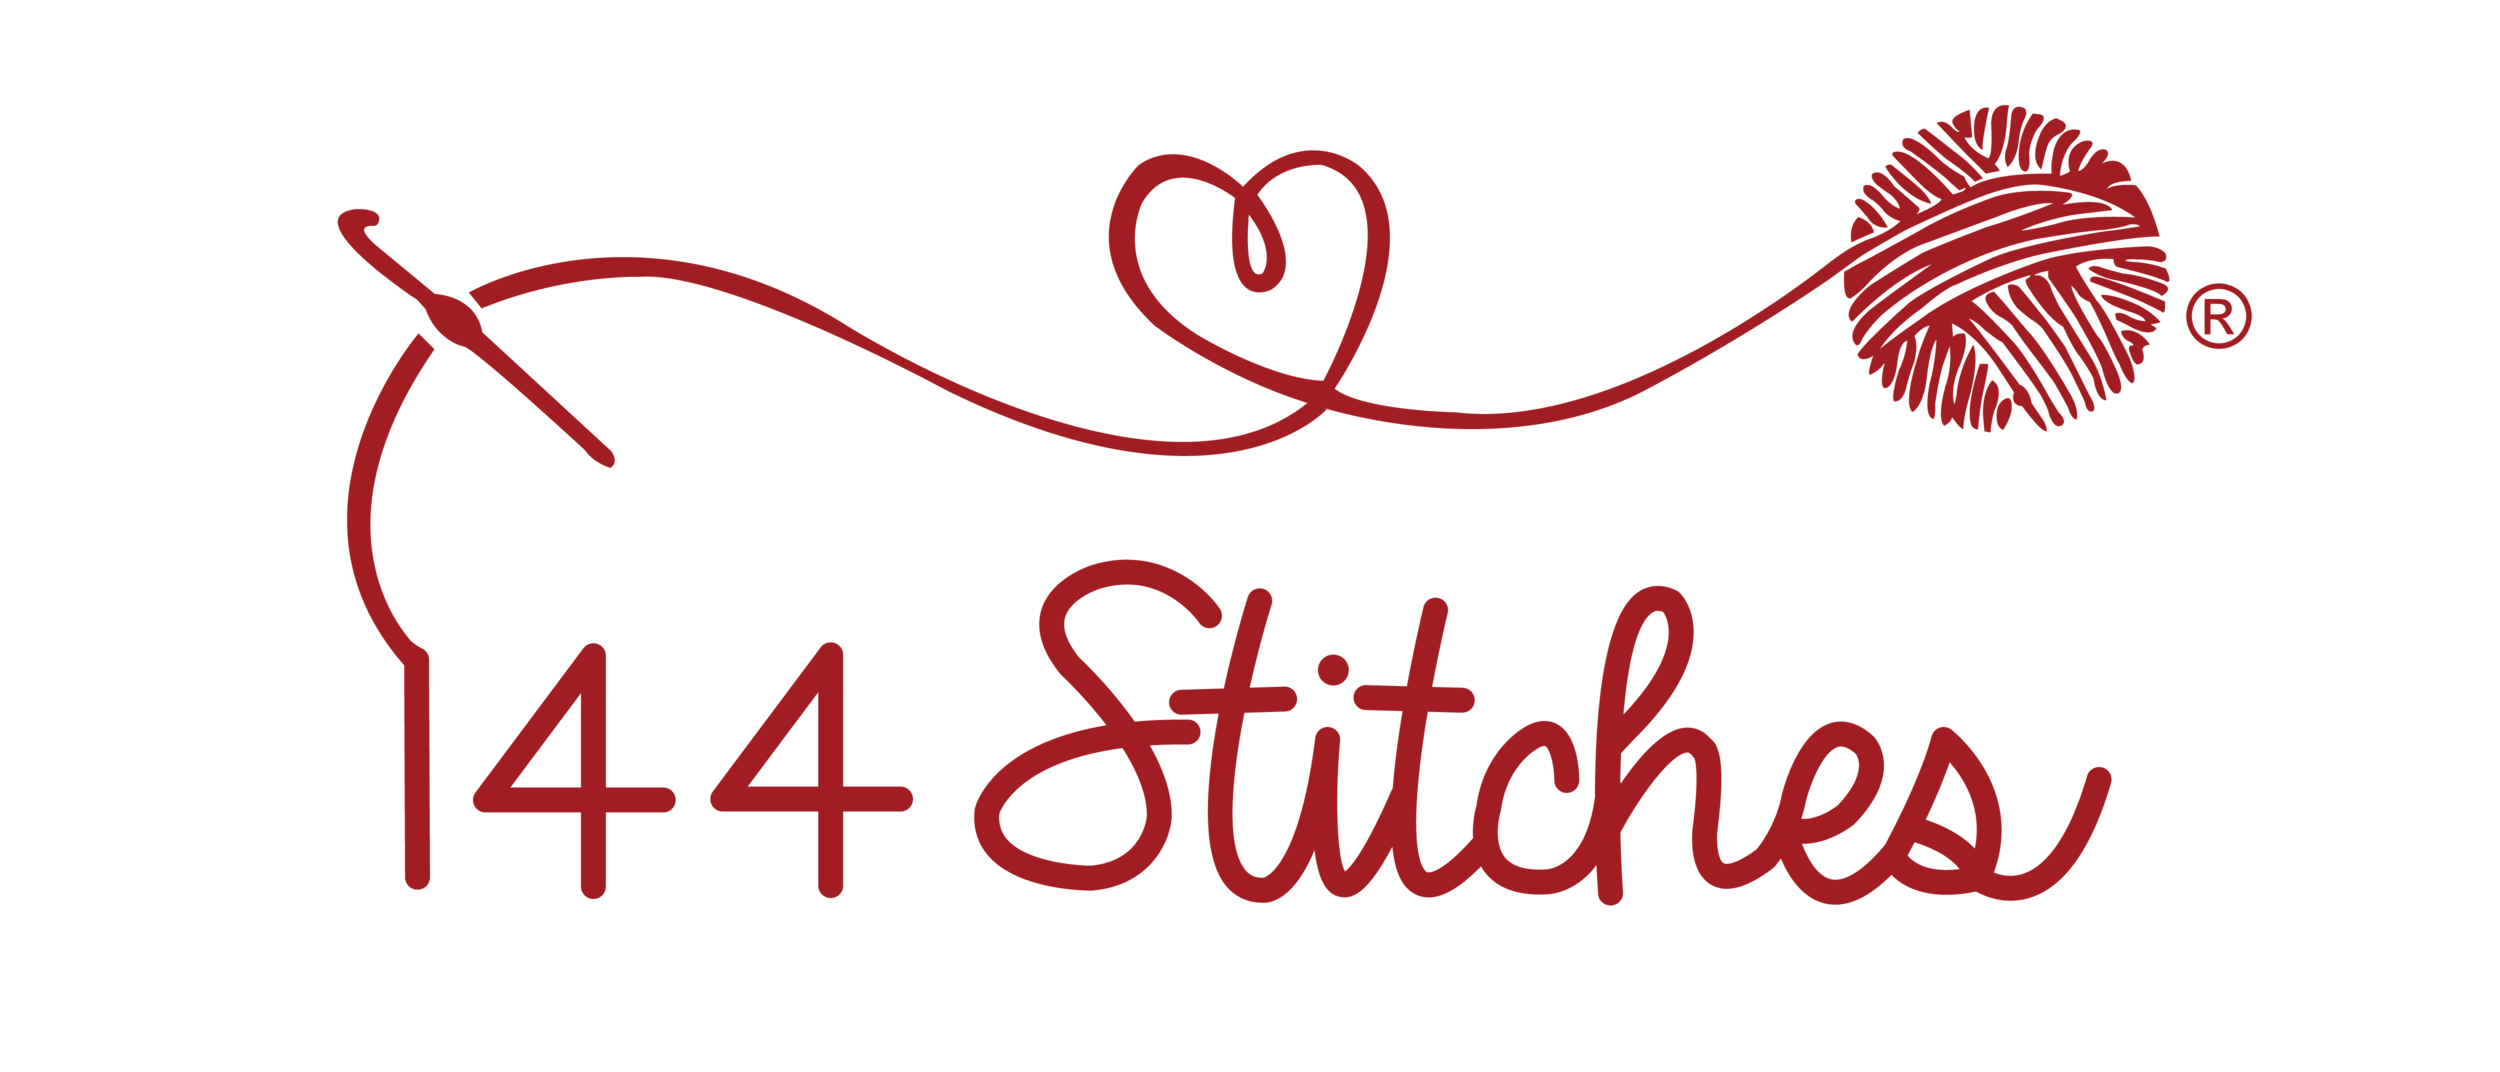 144-stitches-logo-TRANSPARENT-BG.png